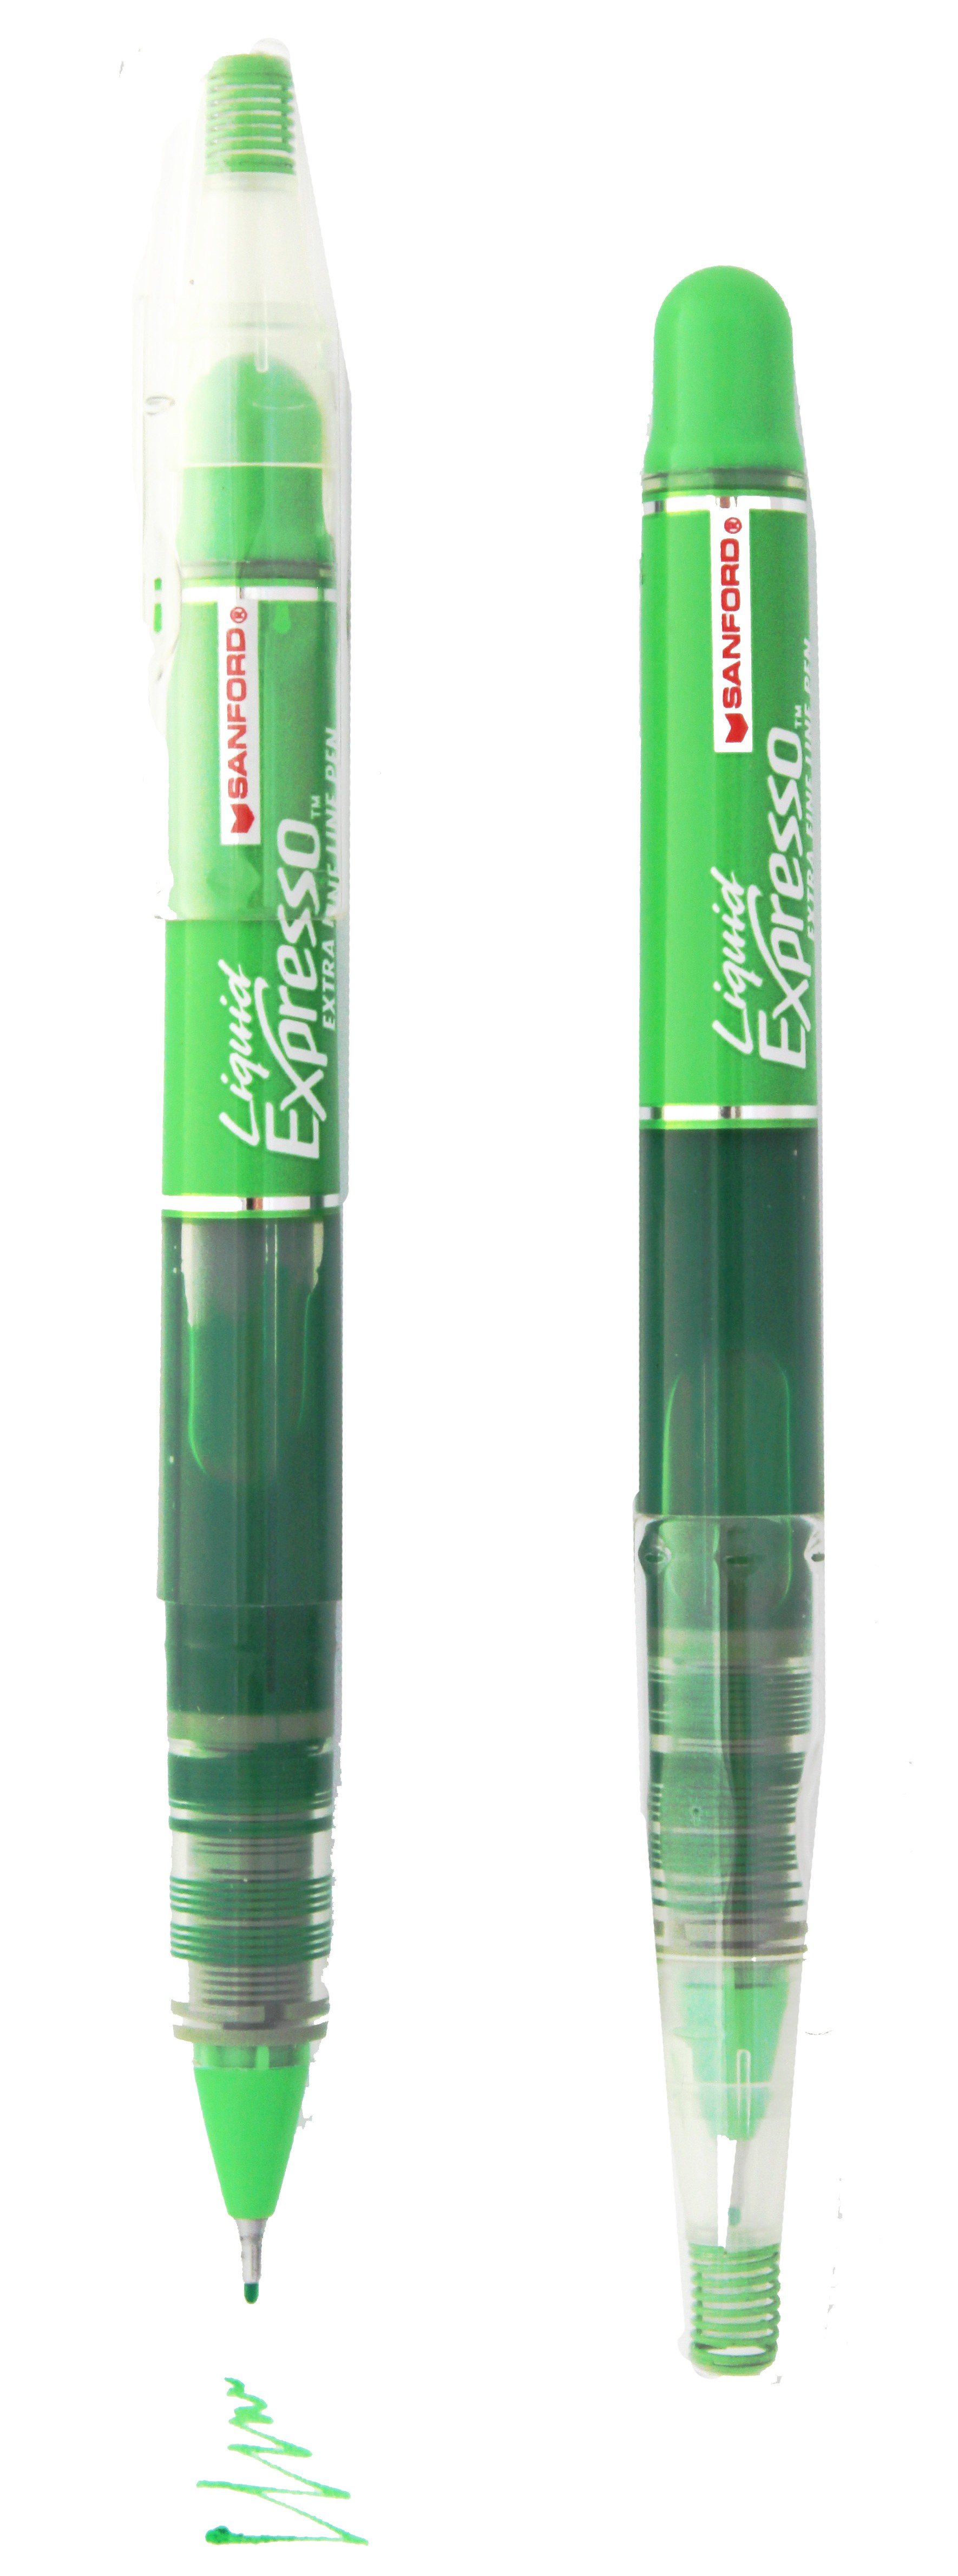 Ручка капиллярная Liquid expresso зелёная